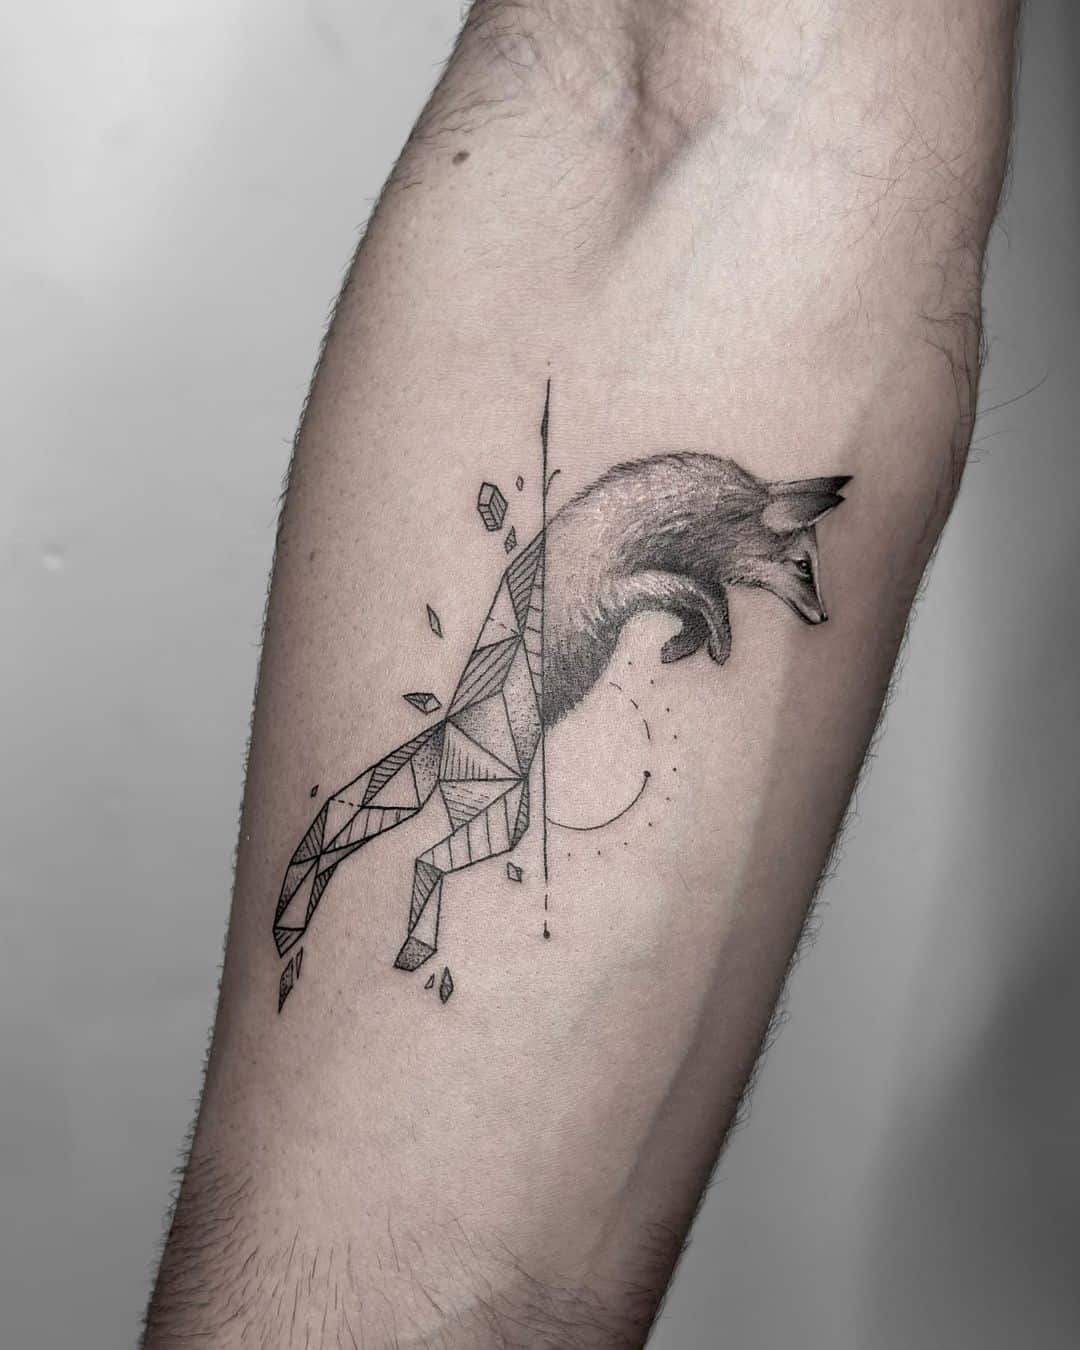 Cute geometric tattoo by zap.ink